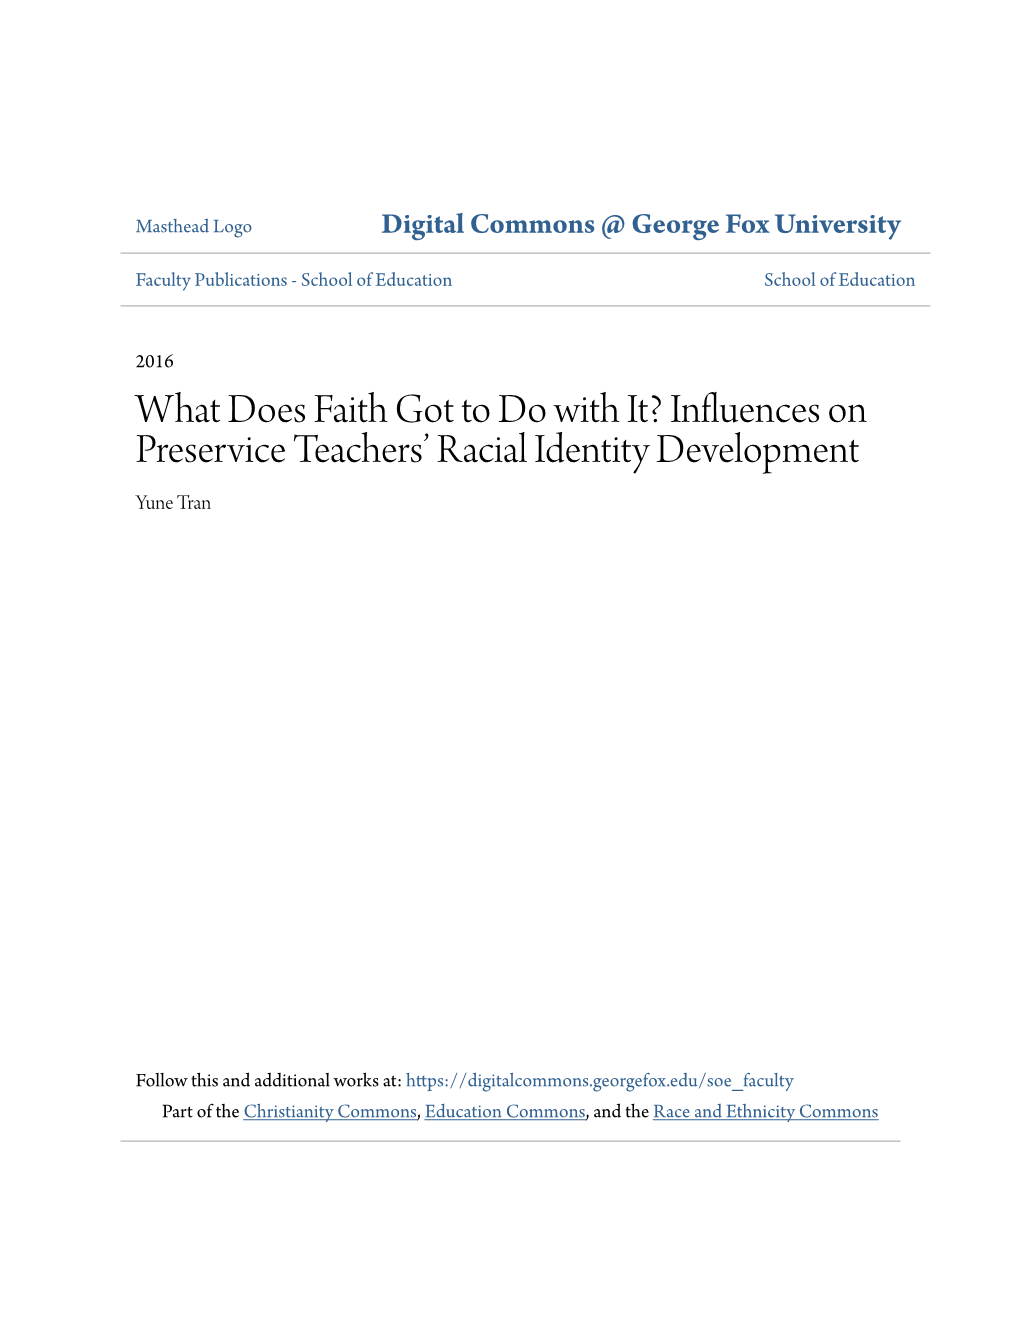 Influences on Preservice Teachers' Racial Identity Development